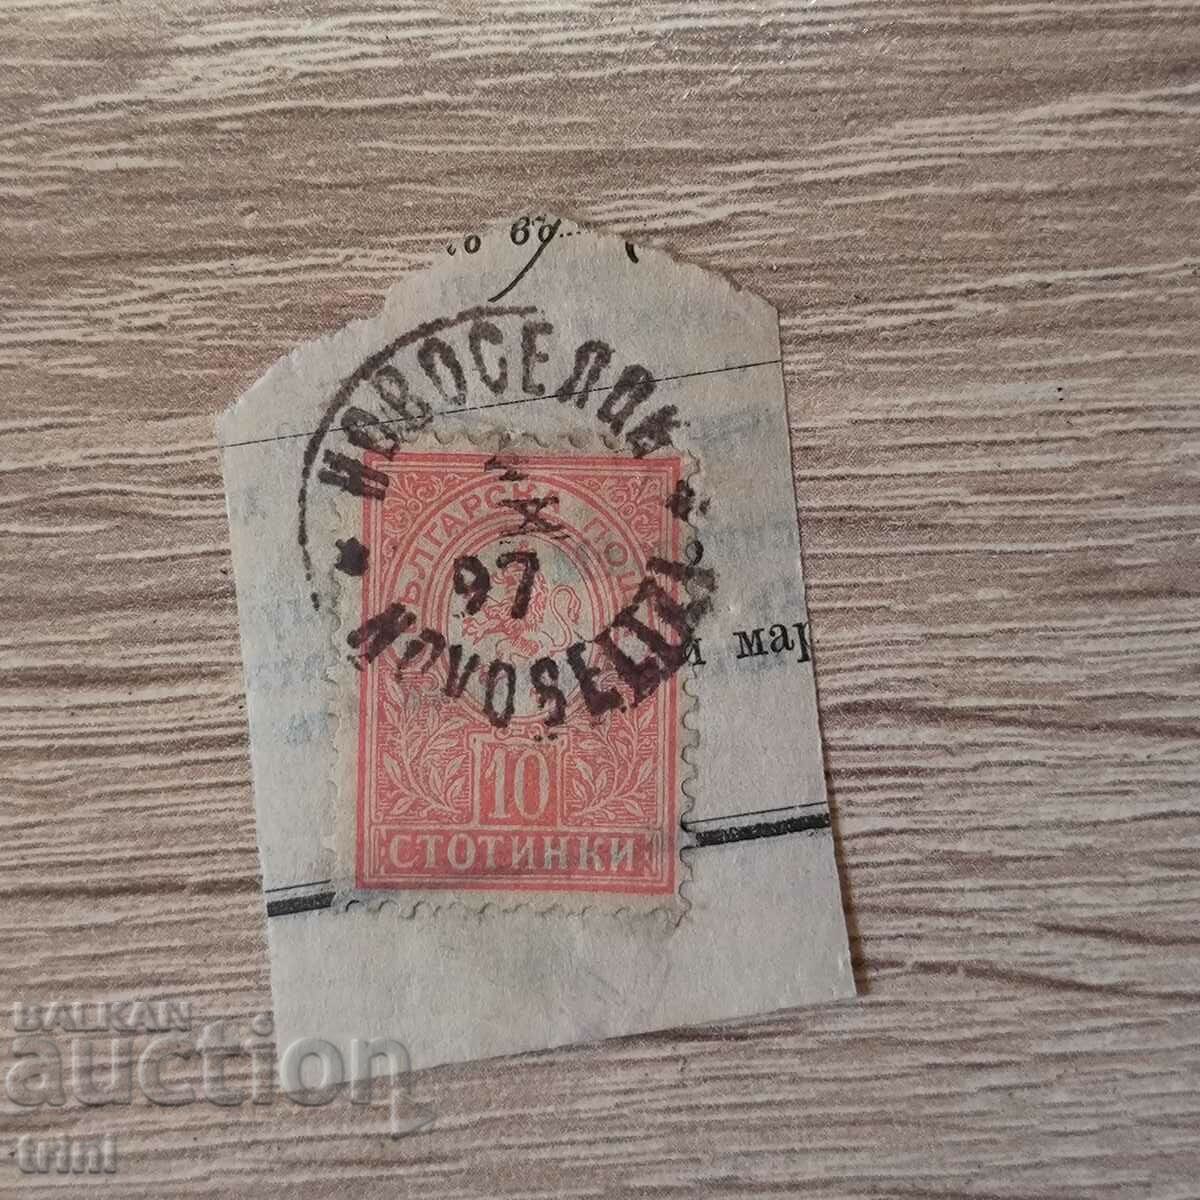 Small lion 1889 10 cents stamp Novoseltsi